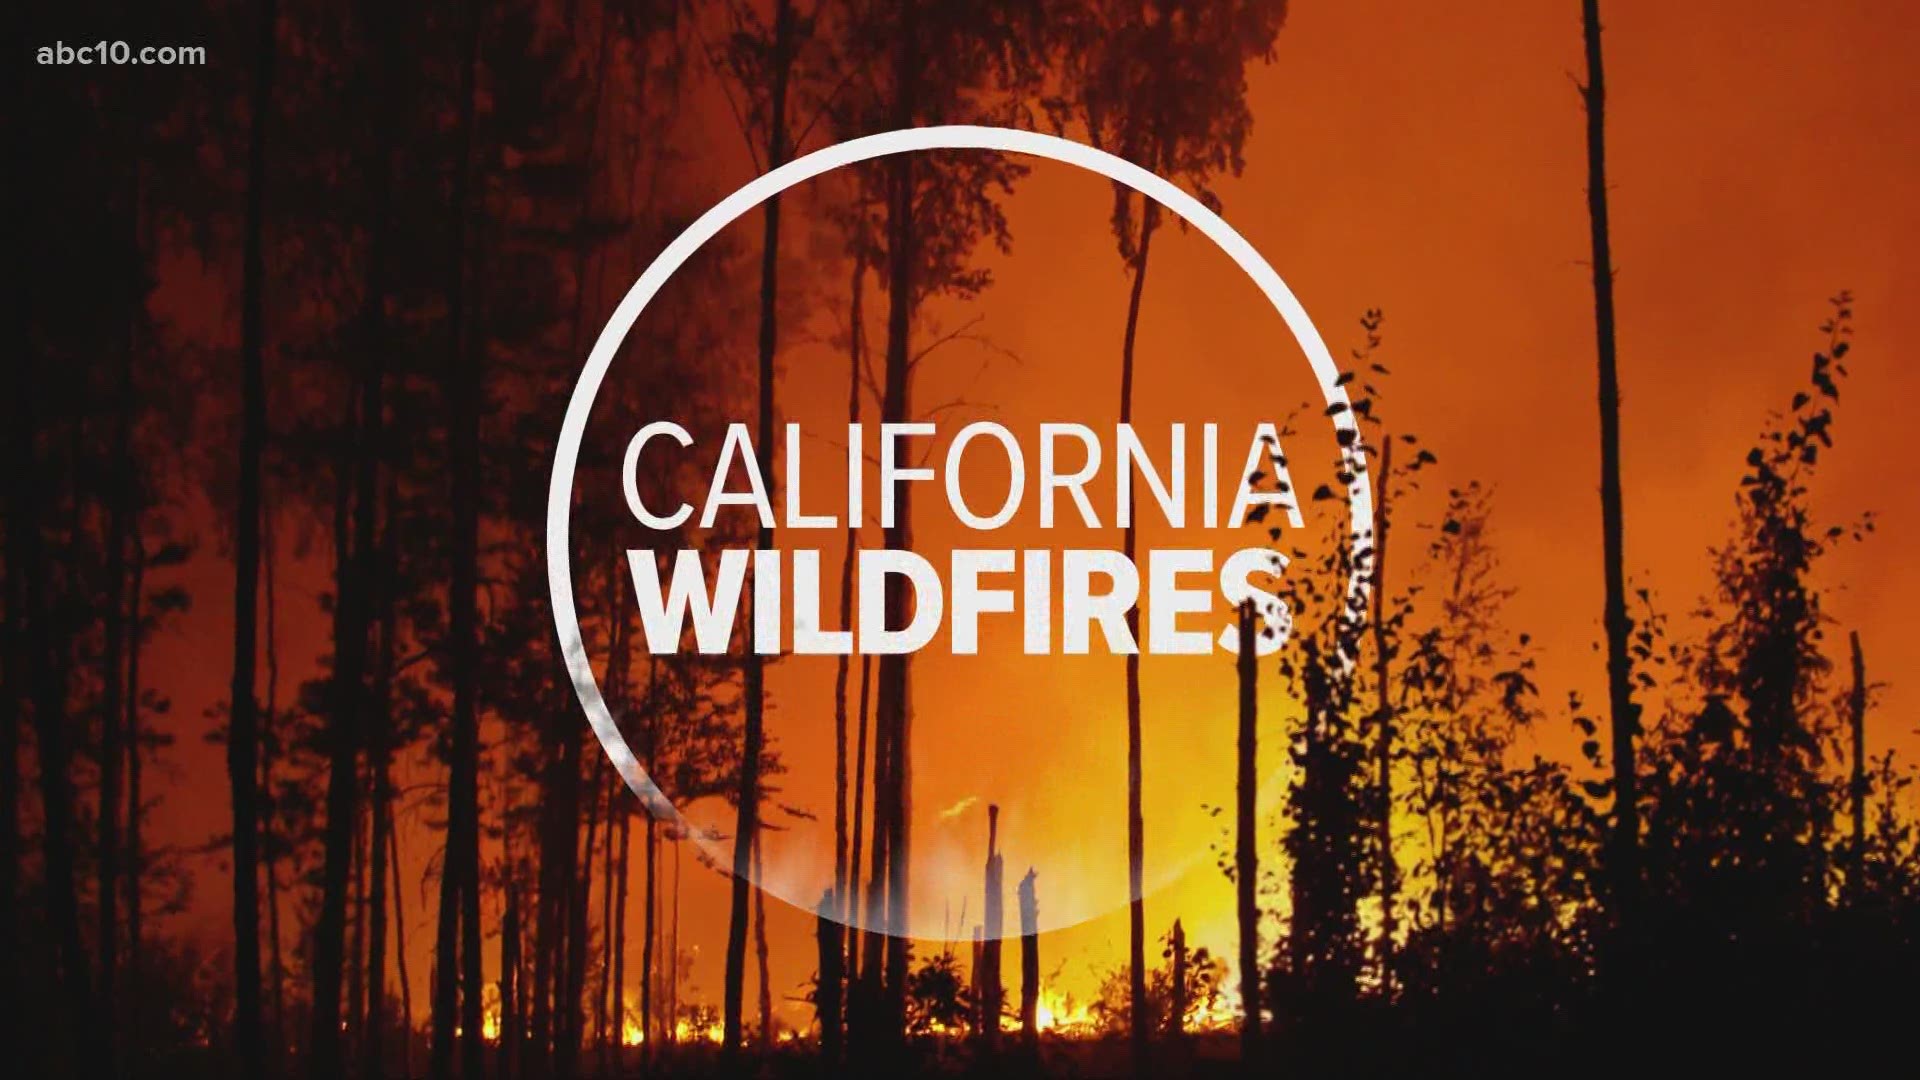 California wildfires 11 p.m. update: August 24, 2020